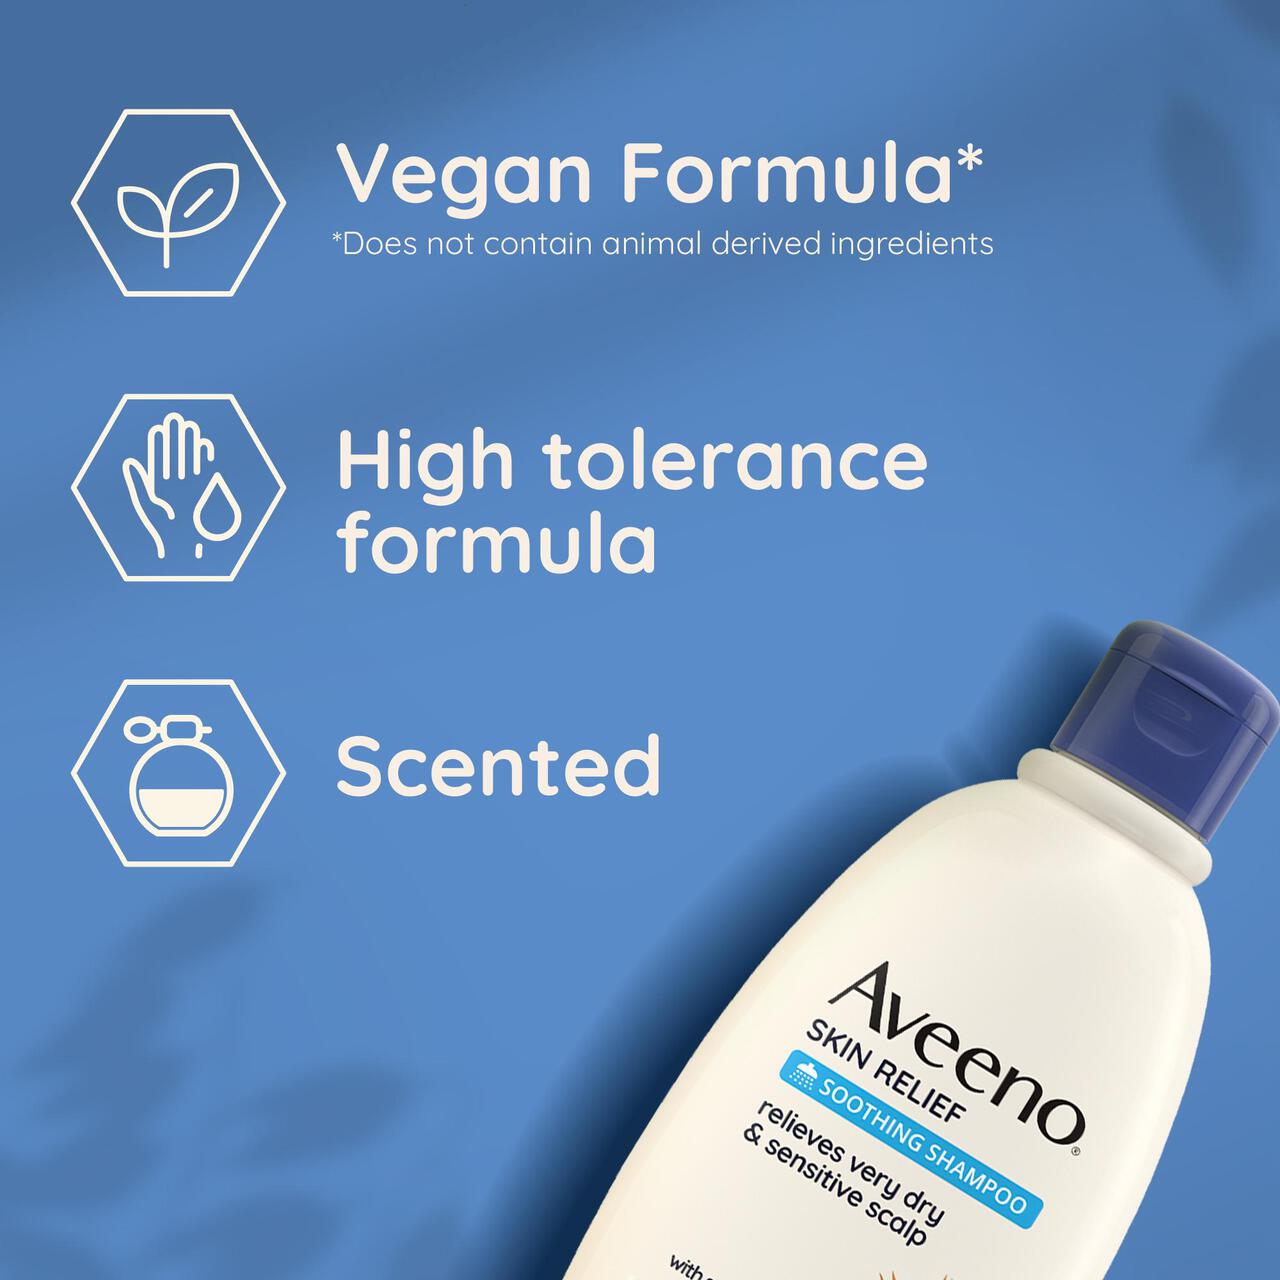 Aveeno Skin Relief Soothing Shampoo 300ml